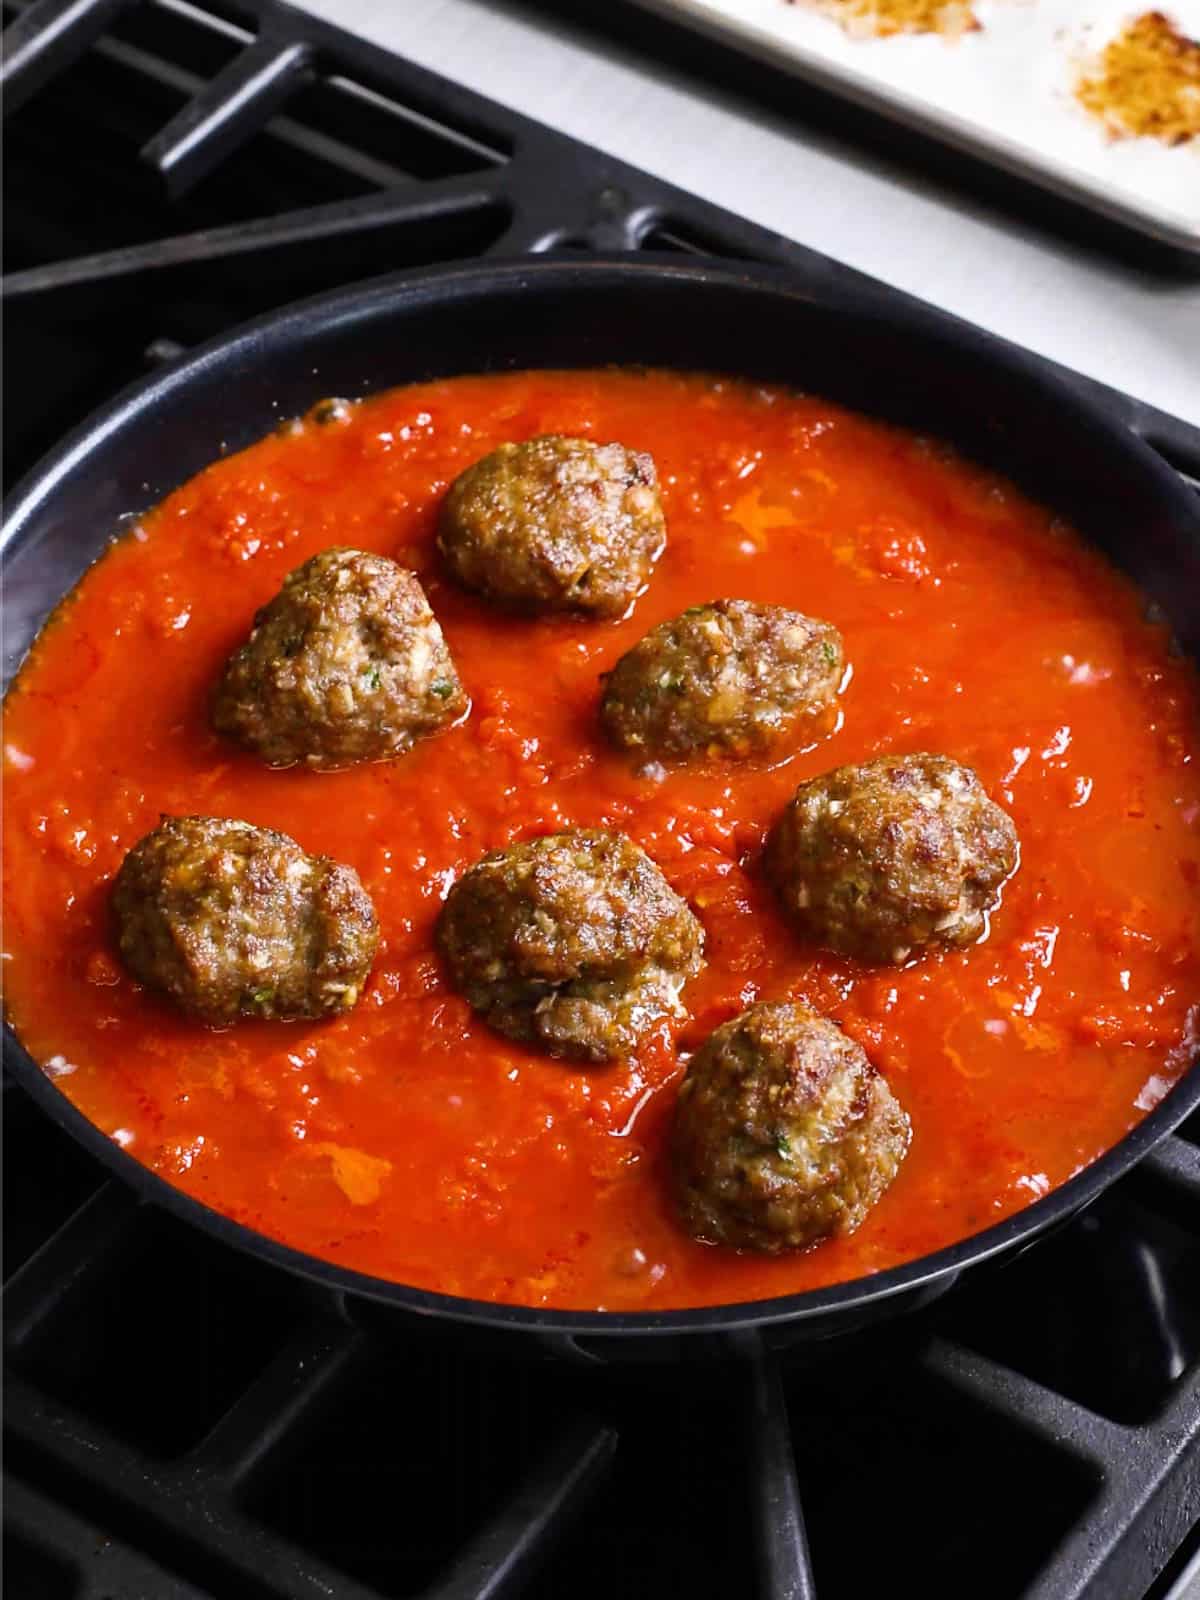 Homemade Italian meatballs simmering in tomato sauce.